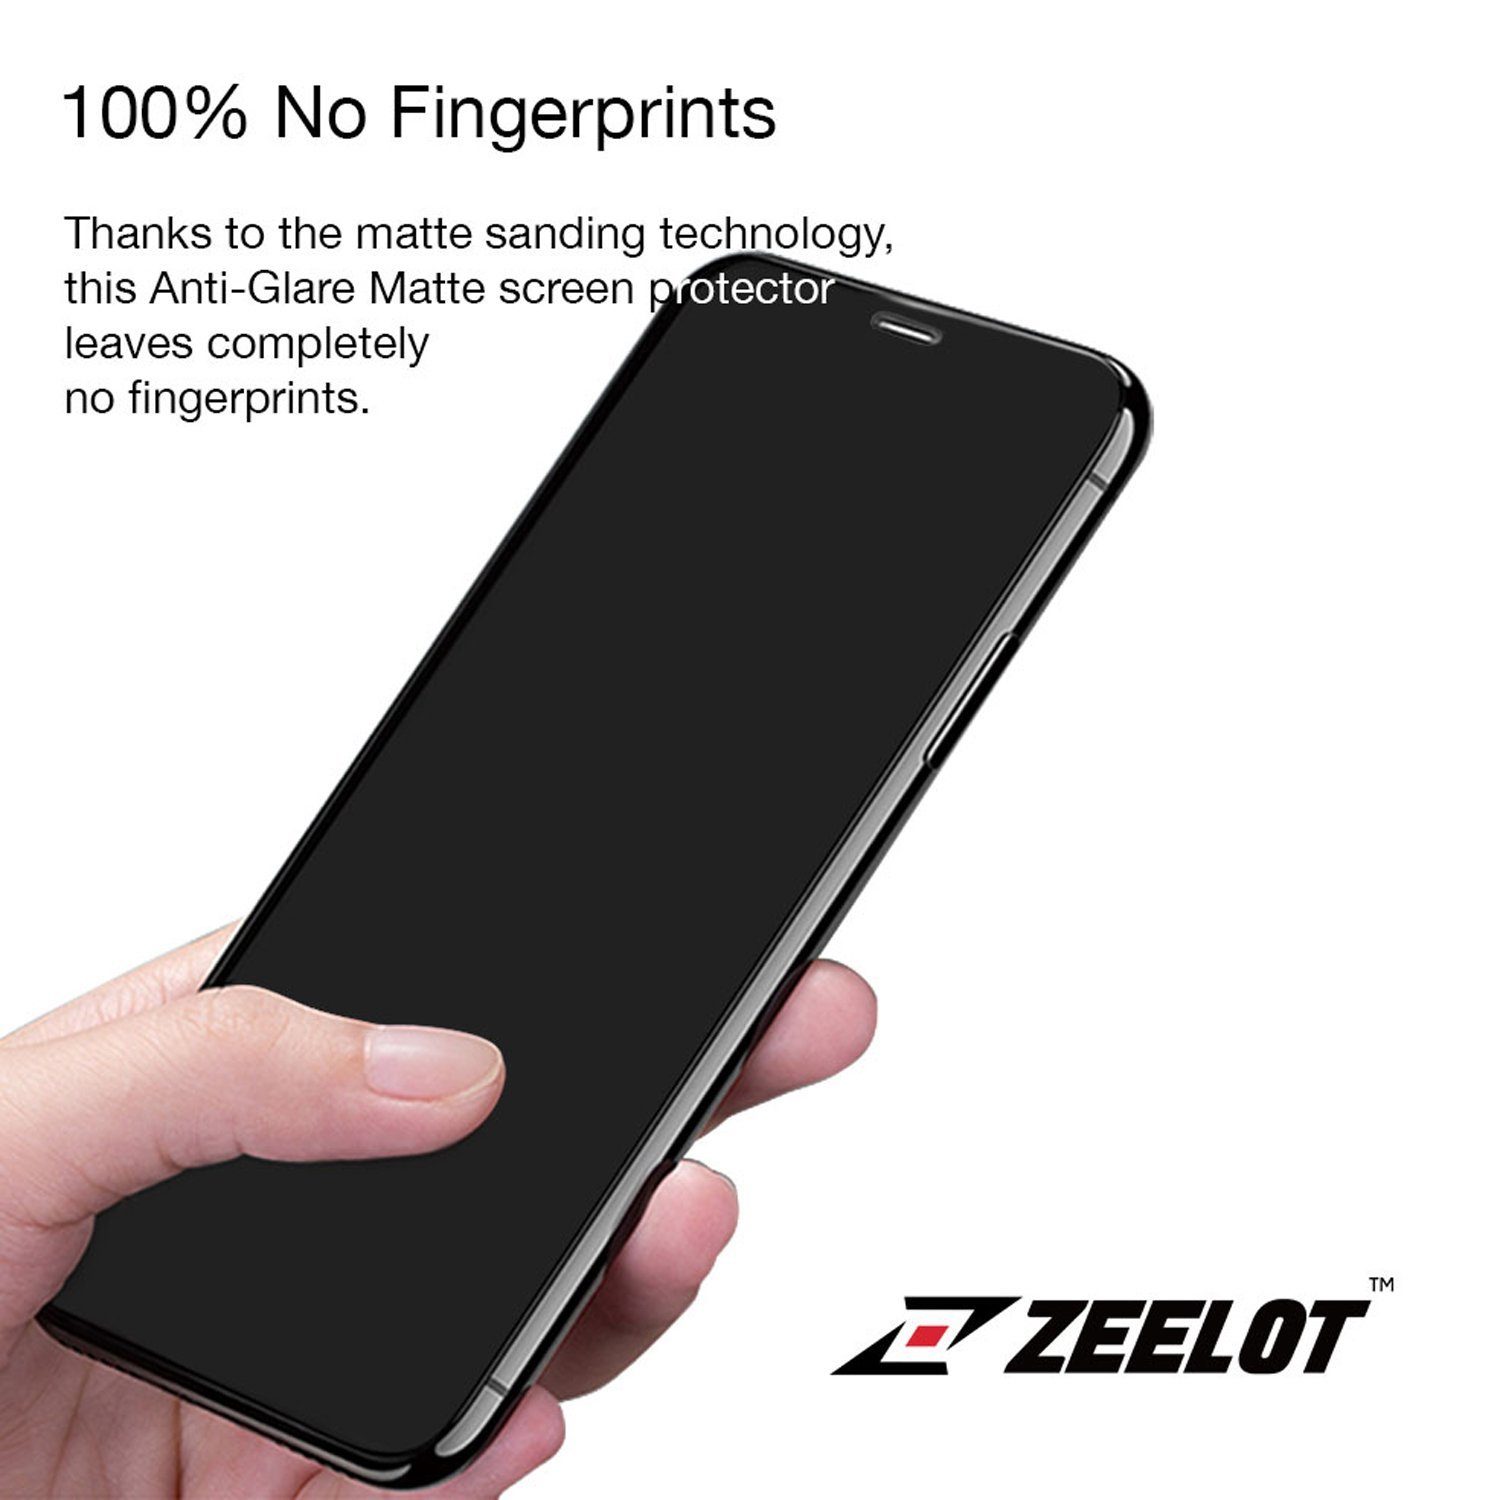 ZEELOT PureShield 2.5D Tempered Glass Screen Protector for Google Pixel 3a XL (2019), Clear Tempered Glass ZEELOT 